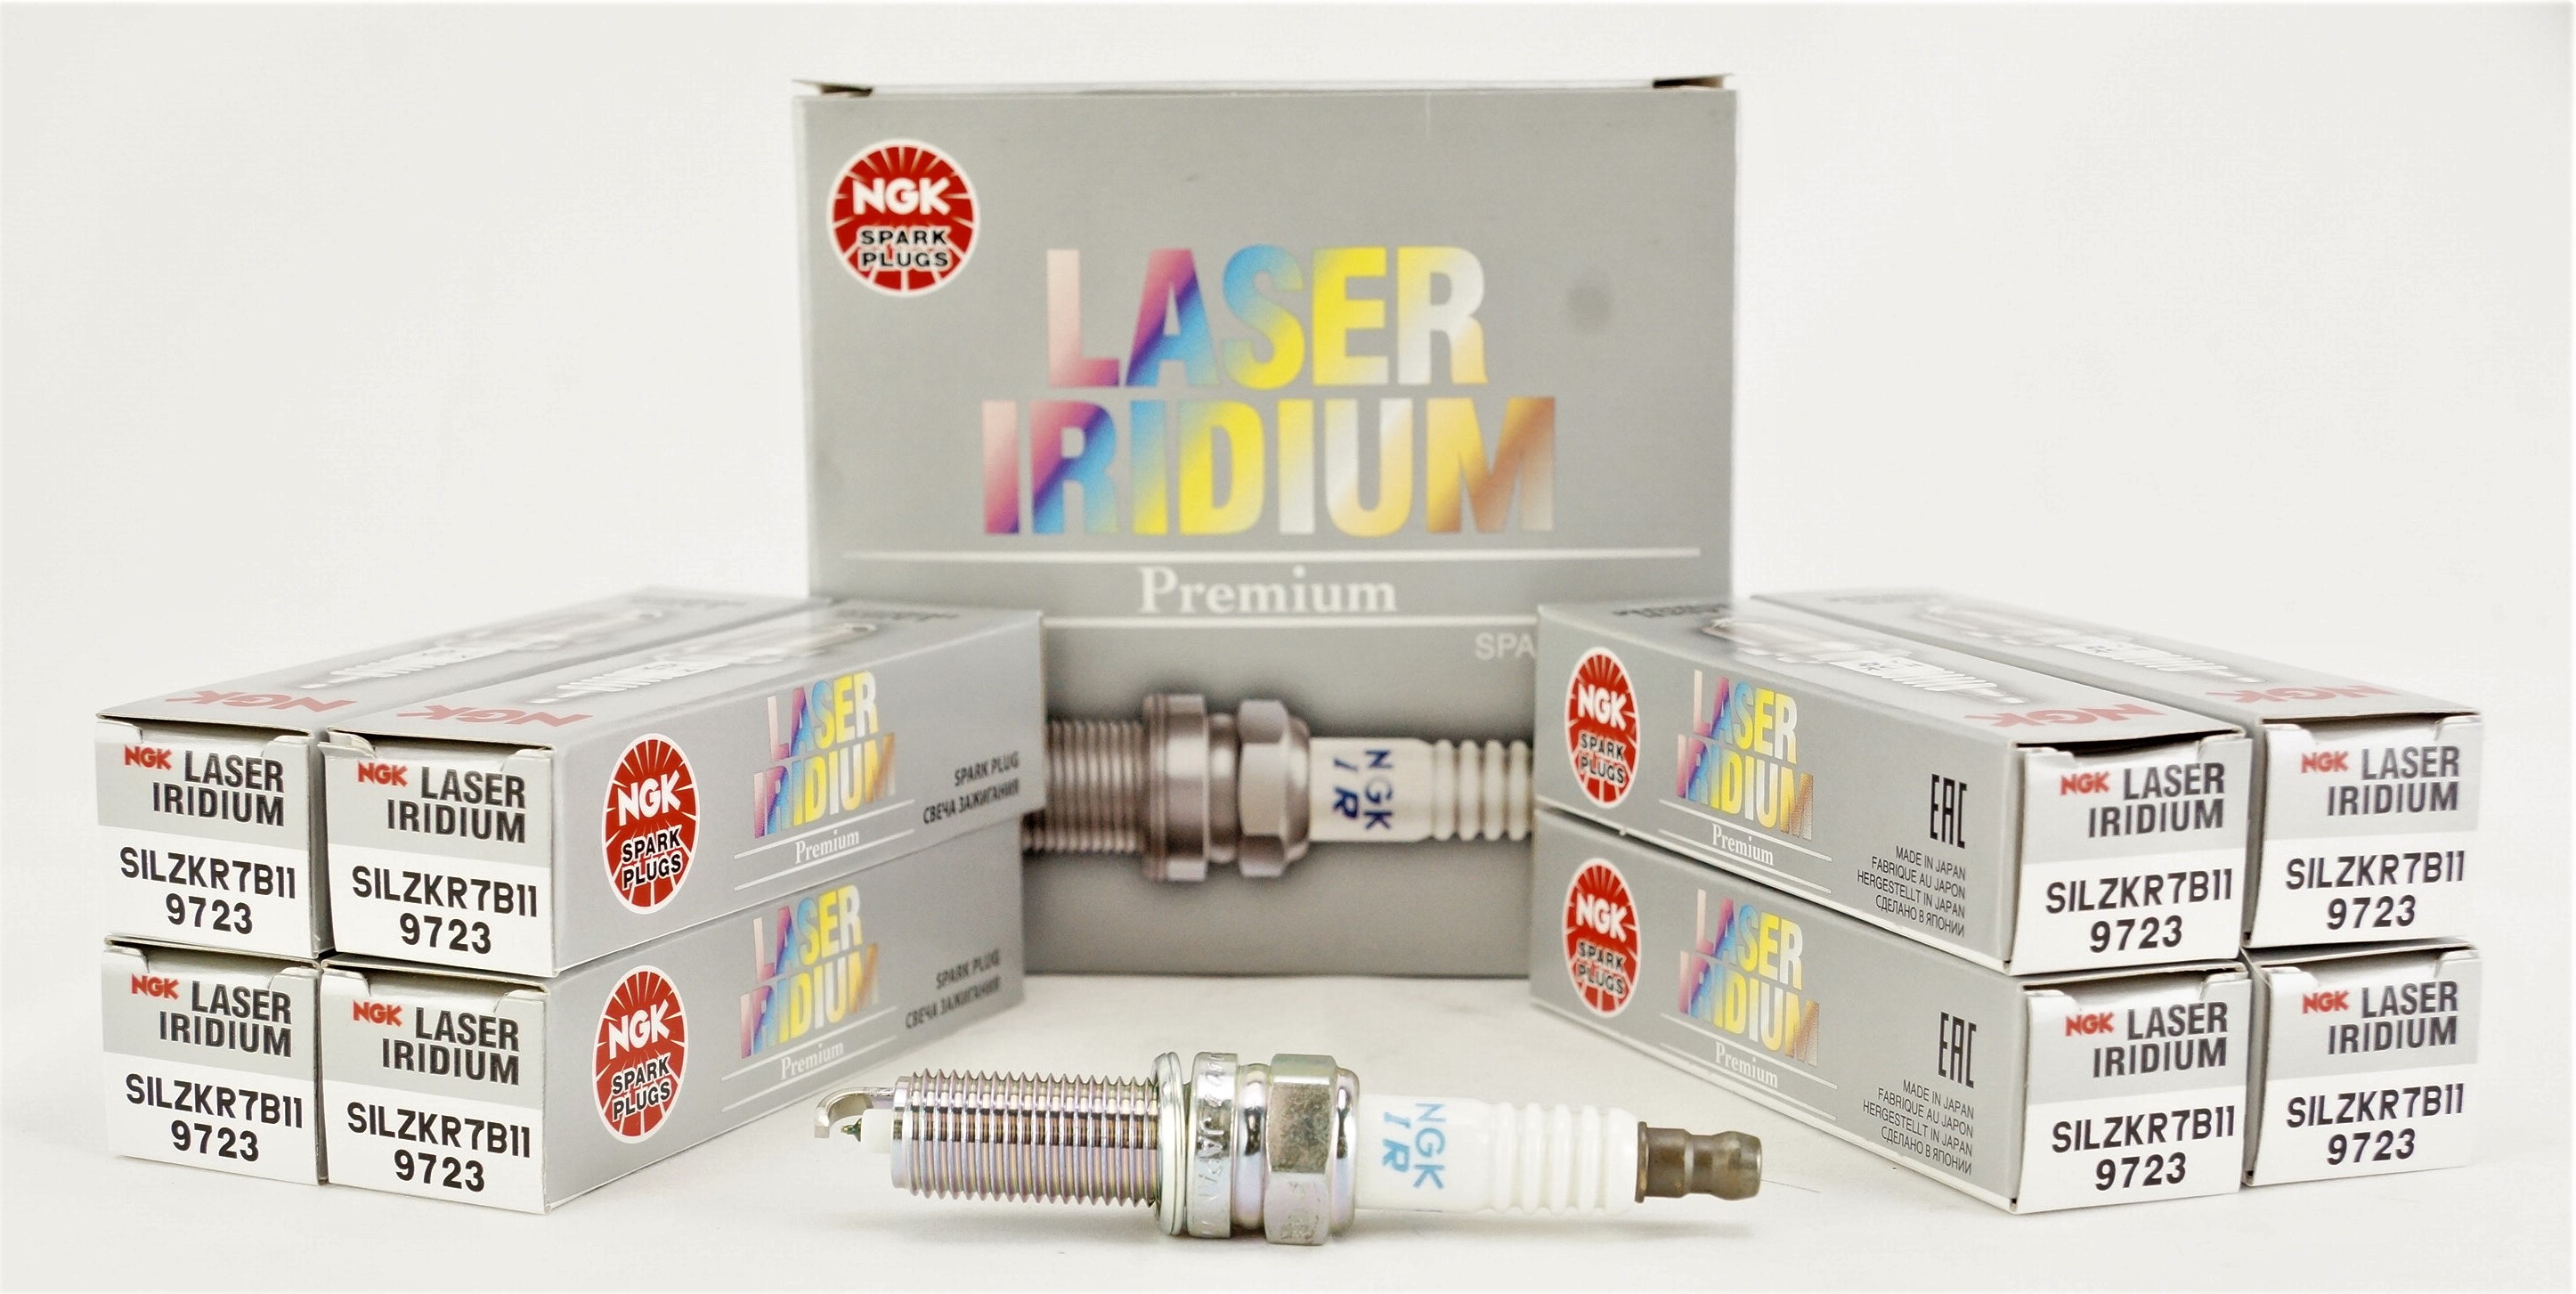 Set of 8 Genuine NGK 9723 Spark Plugs - Laser Iridium SILZKR7B11 Free Shipping - image 1